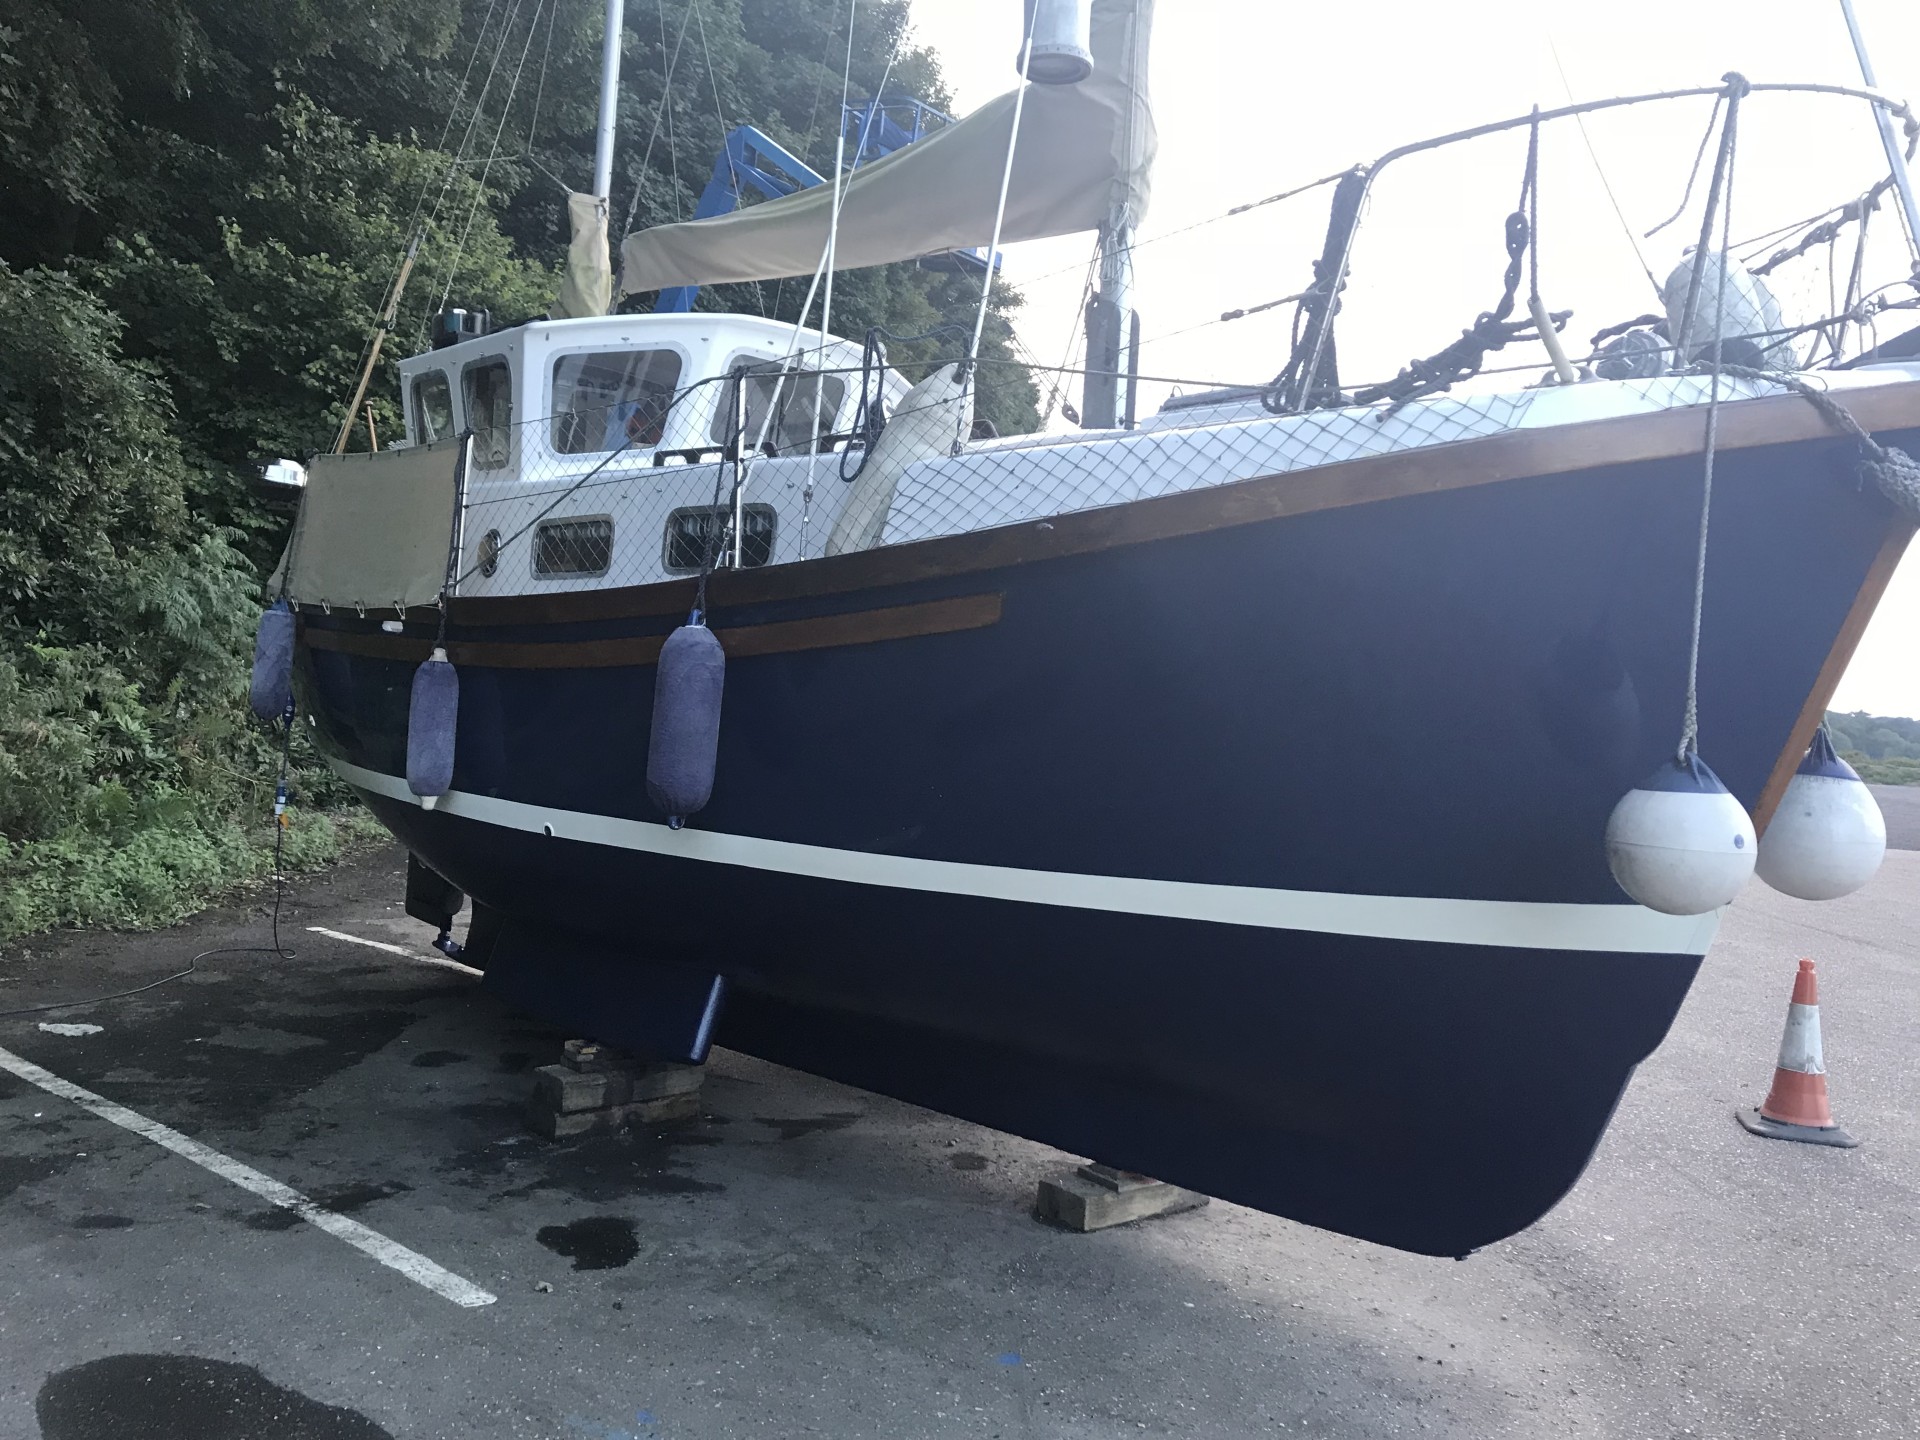 Colvic Watson 27 Foot Ketch Motor Sailing boat for sale.